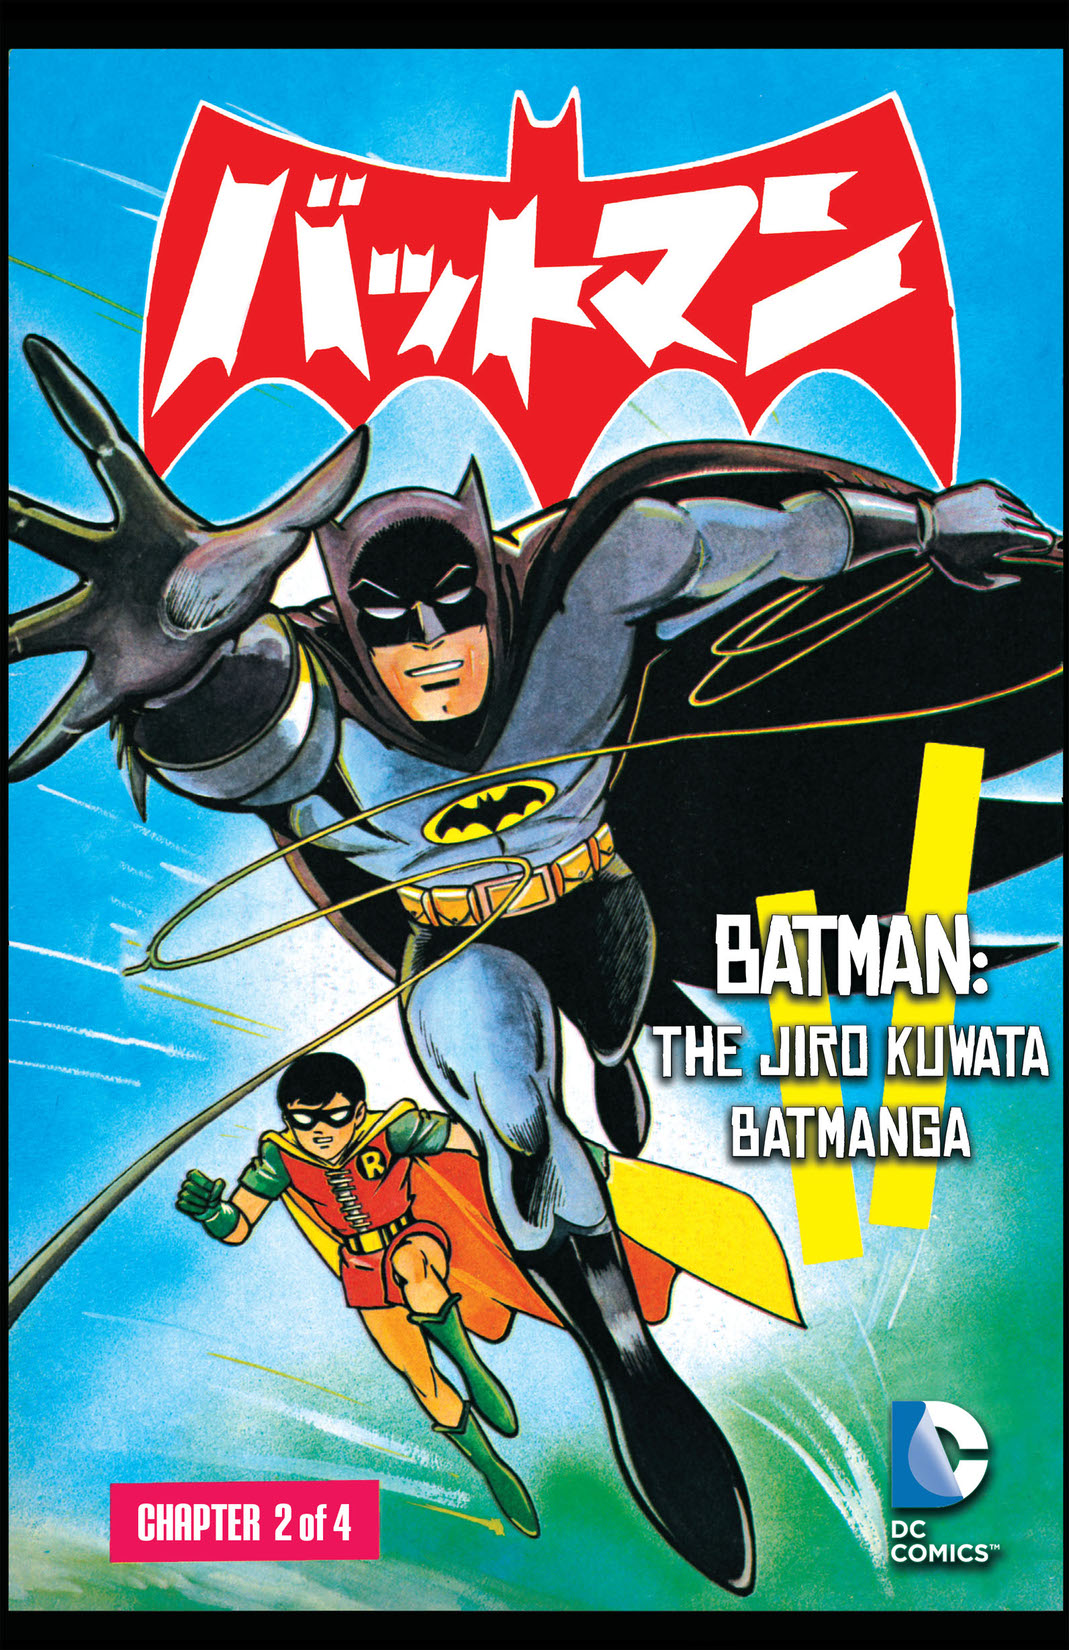 Batman: The Jiro Kuwata Batmanga #21 preview images